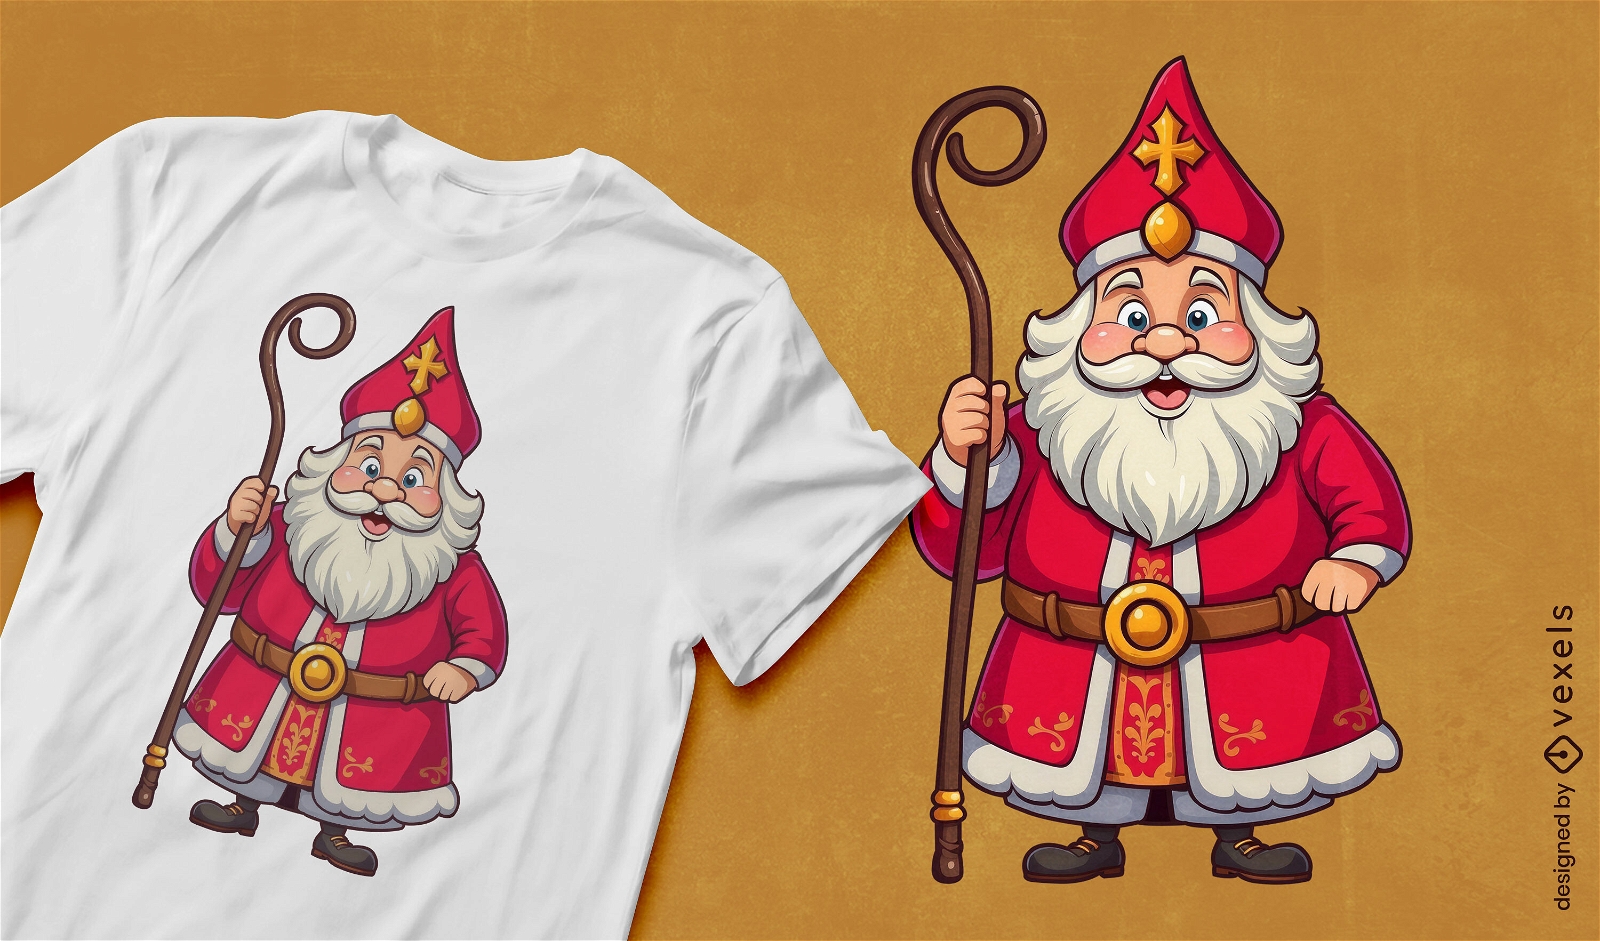 Sinterklaas character t-shirt design